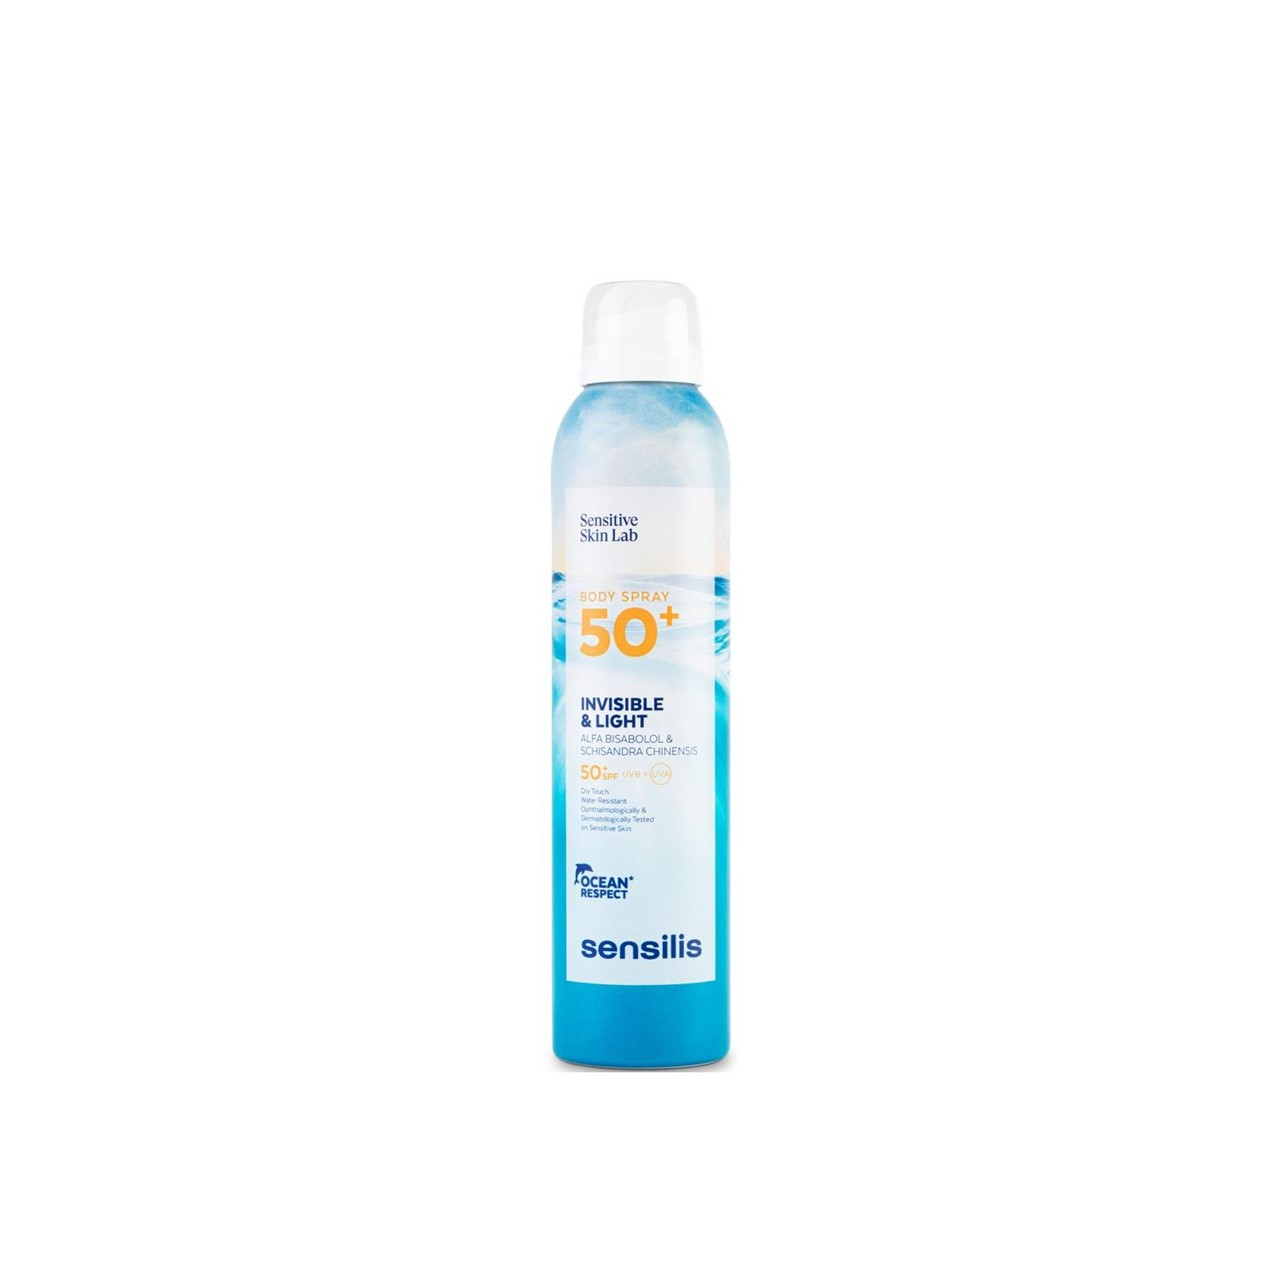 Sensilis Invisible & Light Body Spray SPF50+ 200ml (6.76fl oz)